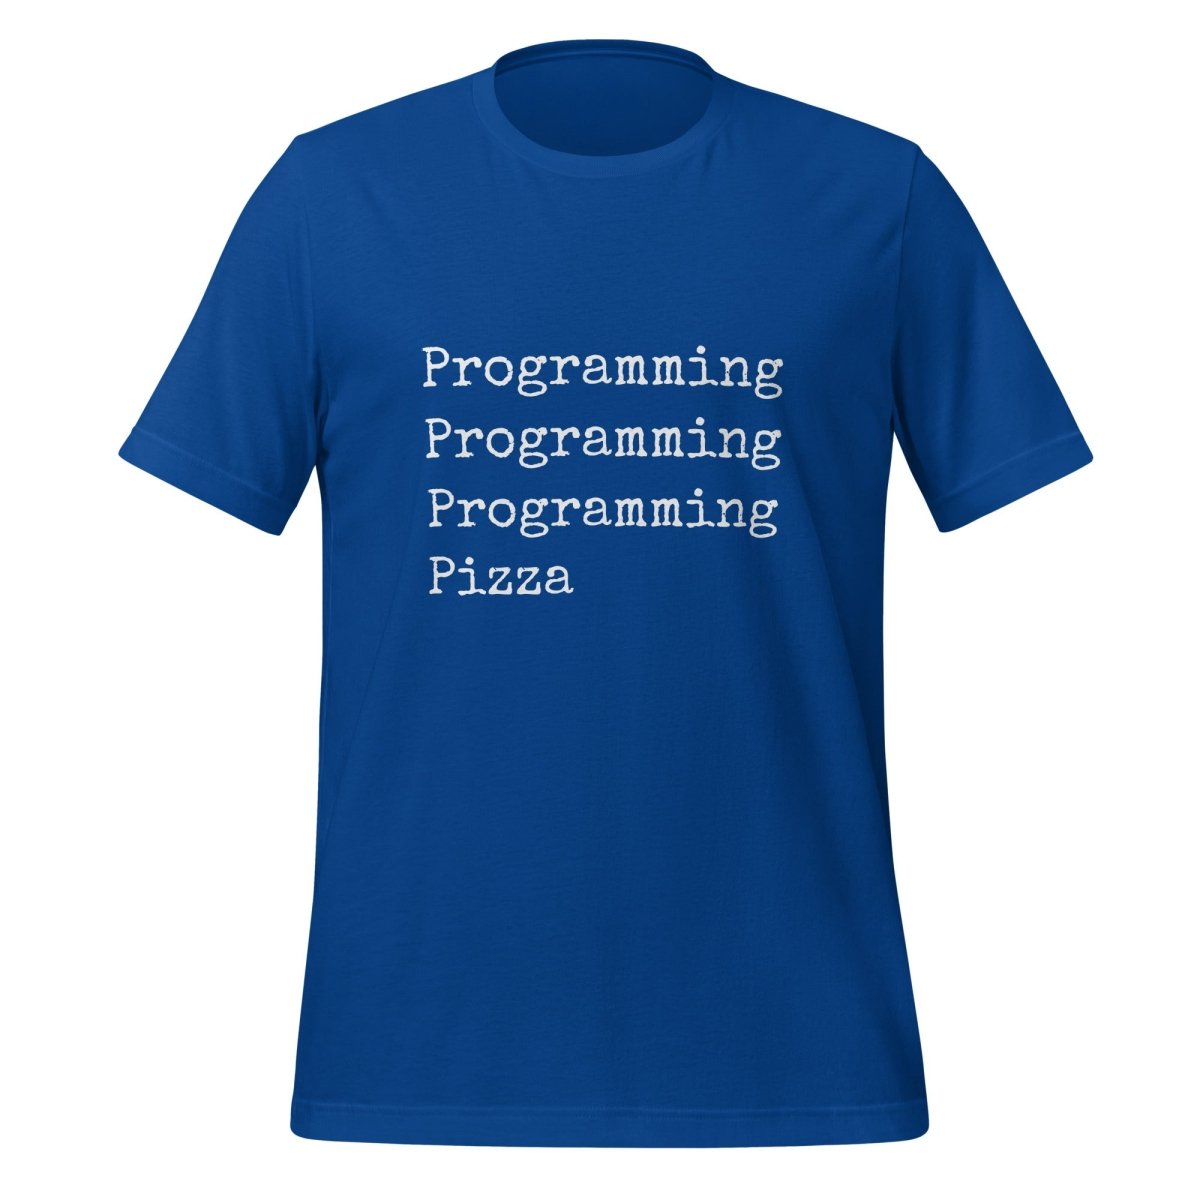 Programming & Pizza T - Shirt (unisex) - True Royal - AI Store